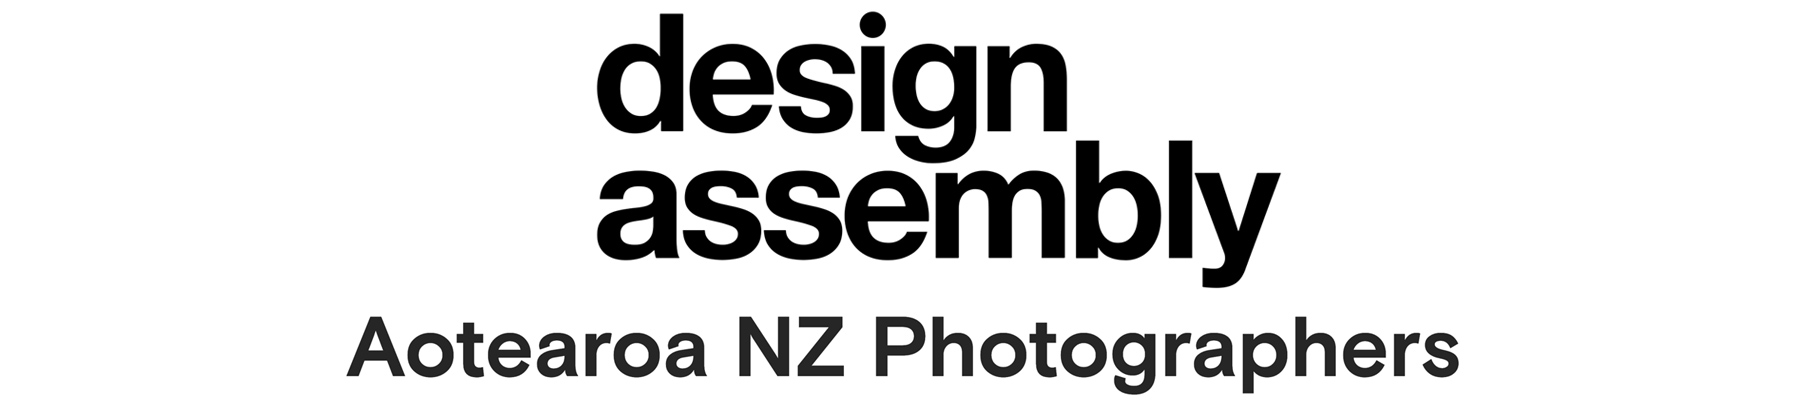 Design Assembly Aotearoa NZ Photographer��Manja Wachsmuth